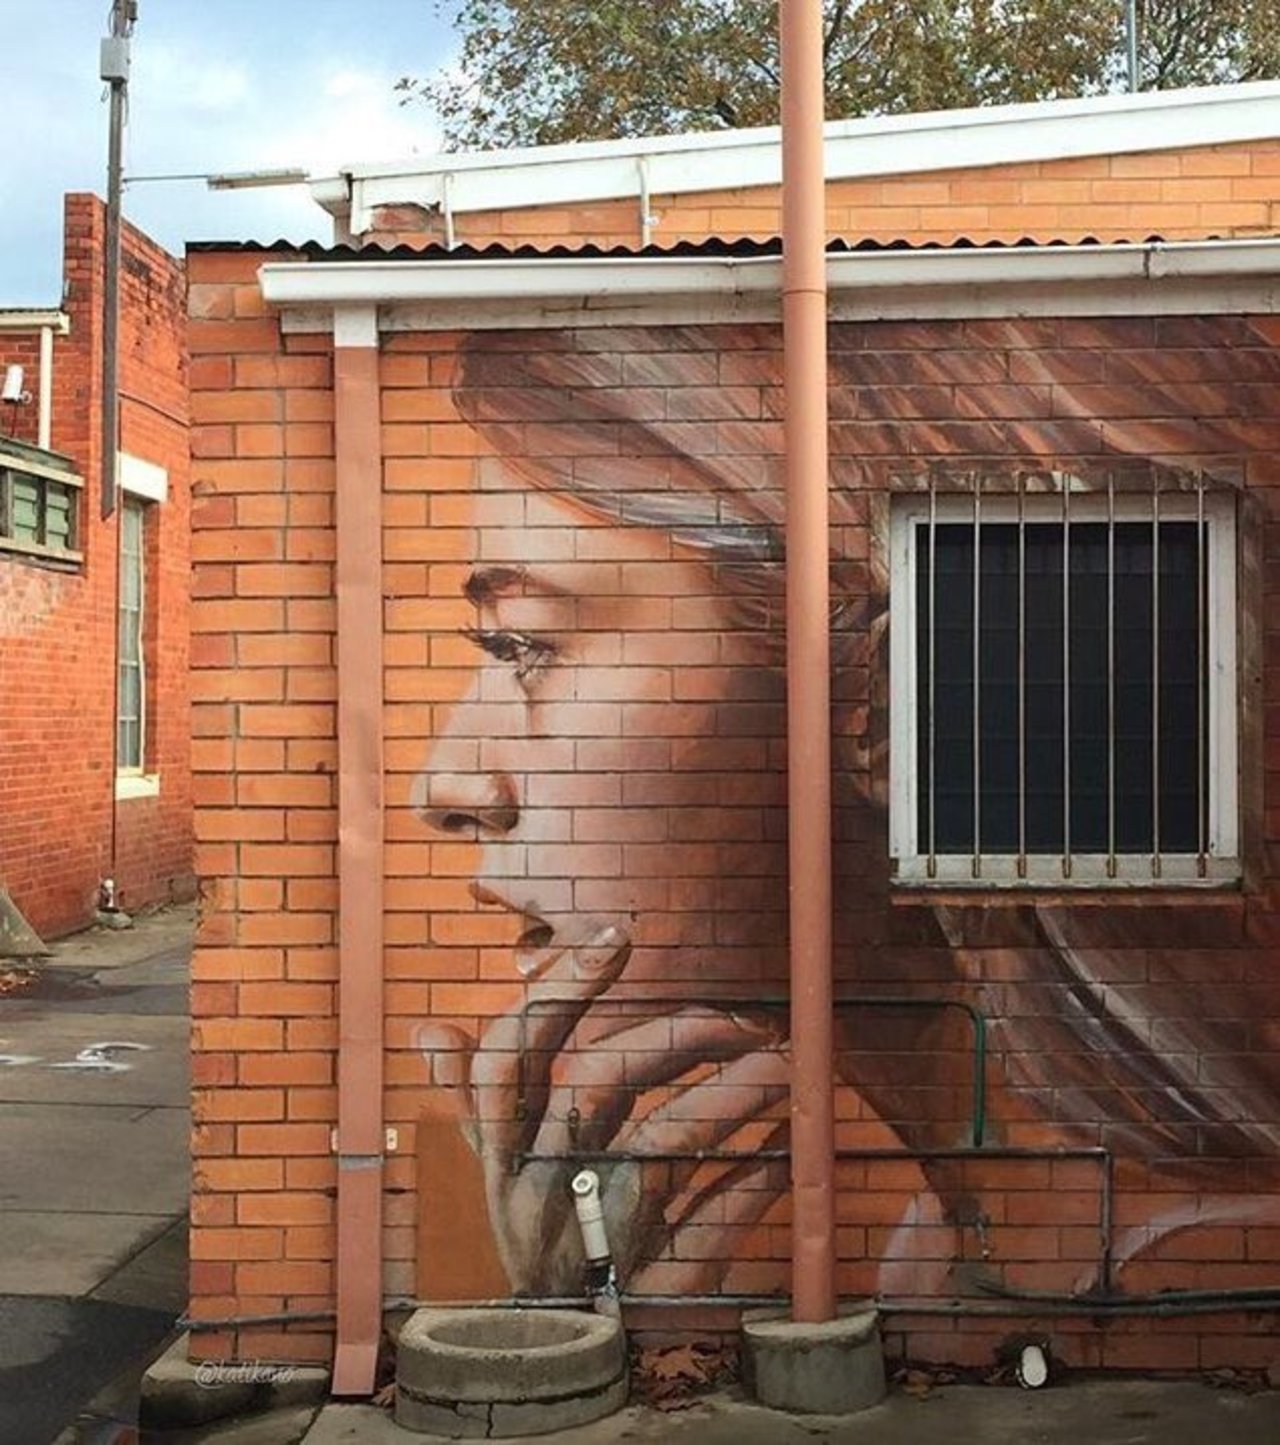 #Mural by Rone #Melbourne #Australia #Streetart #graffiti #art https://t.co/hzOHkkXp0m